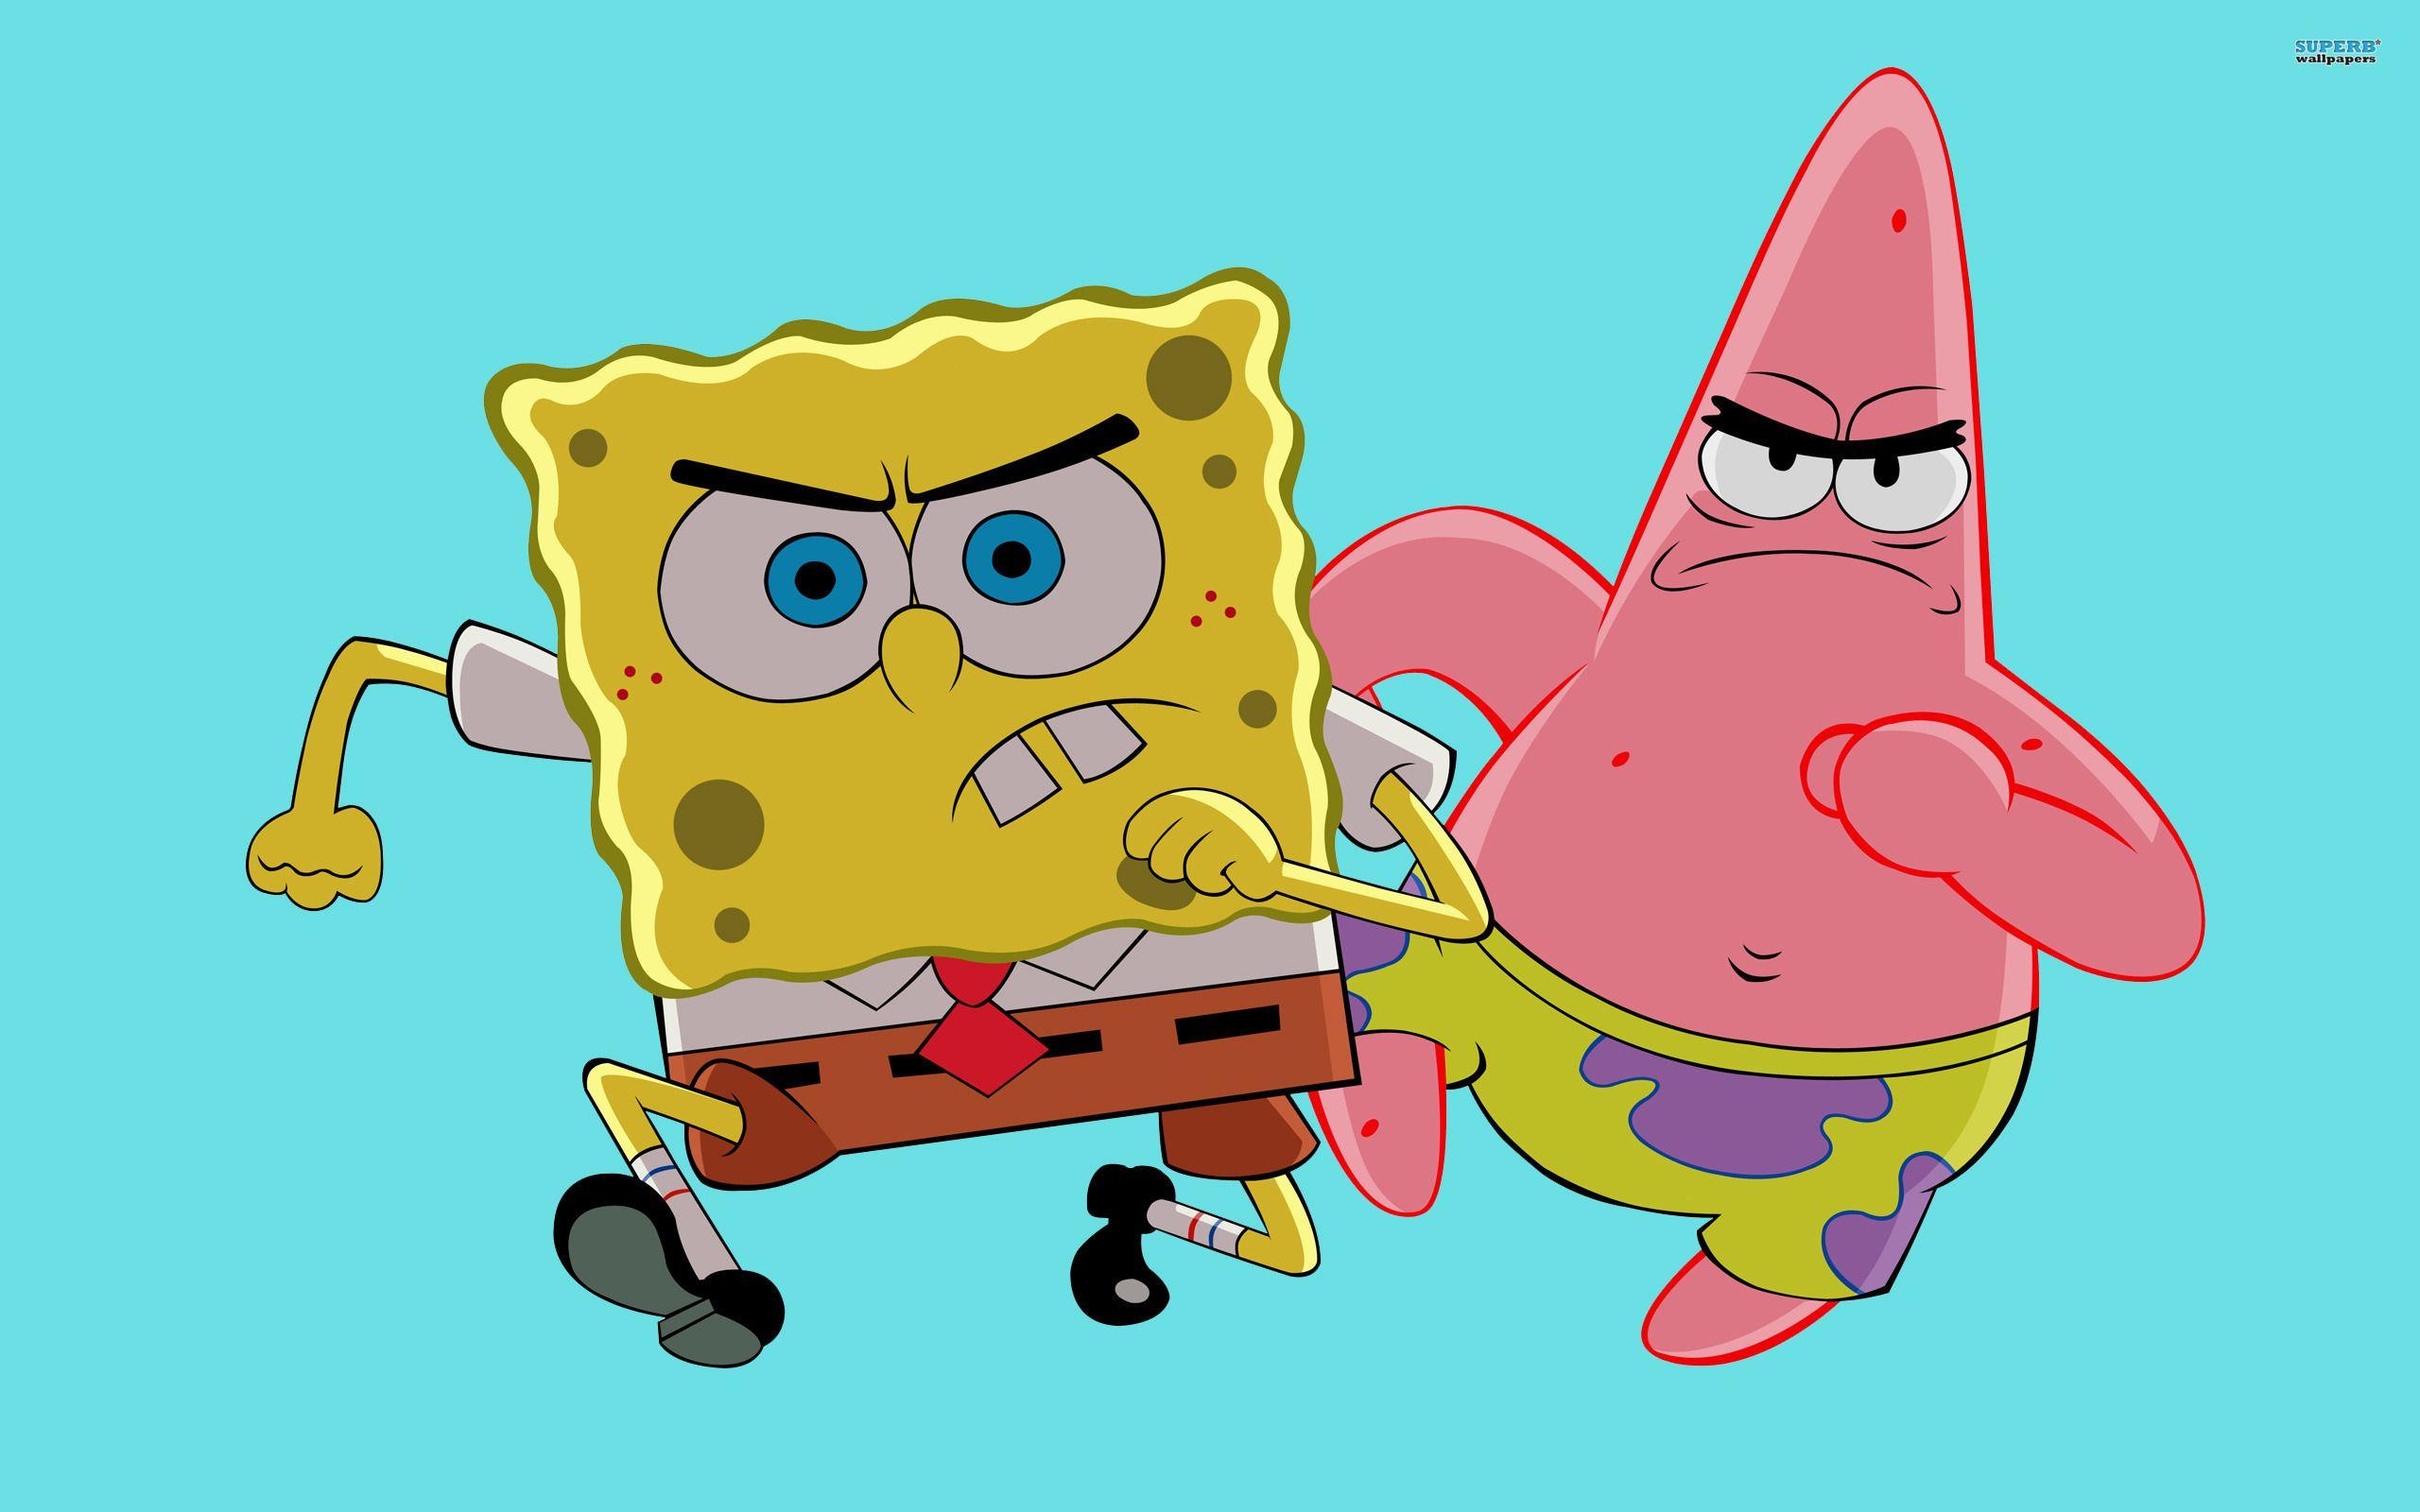 Quickly Picture Of Spongebob And Patrick Image Squarepants 33210739